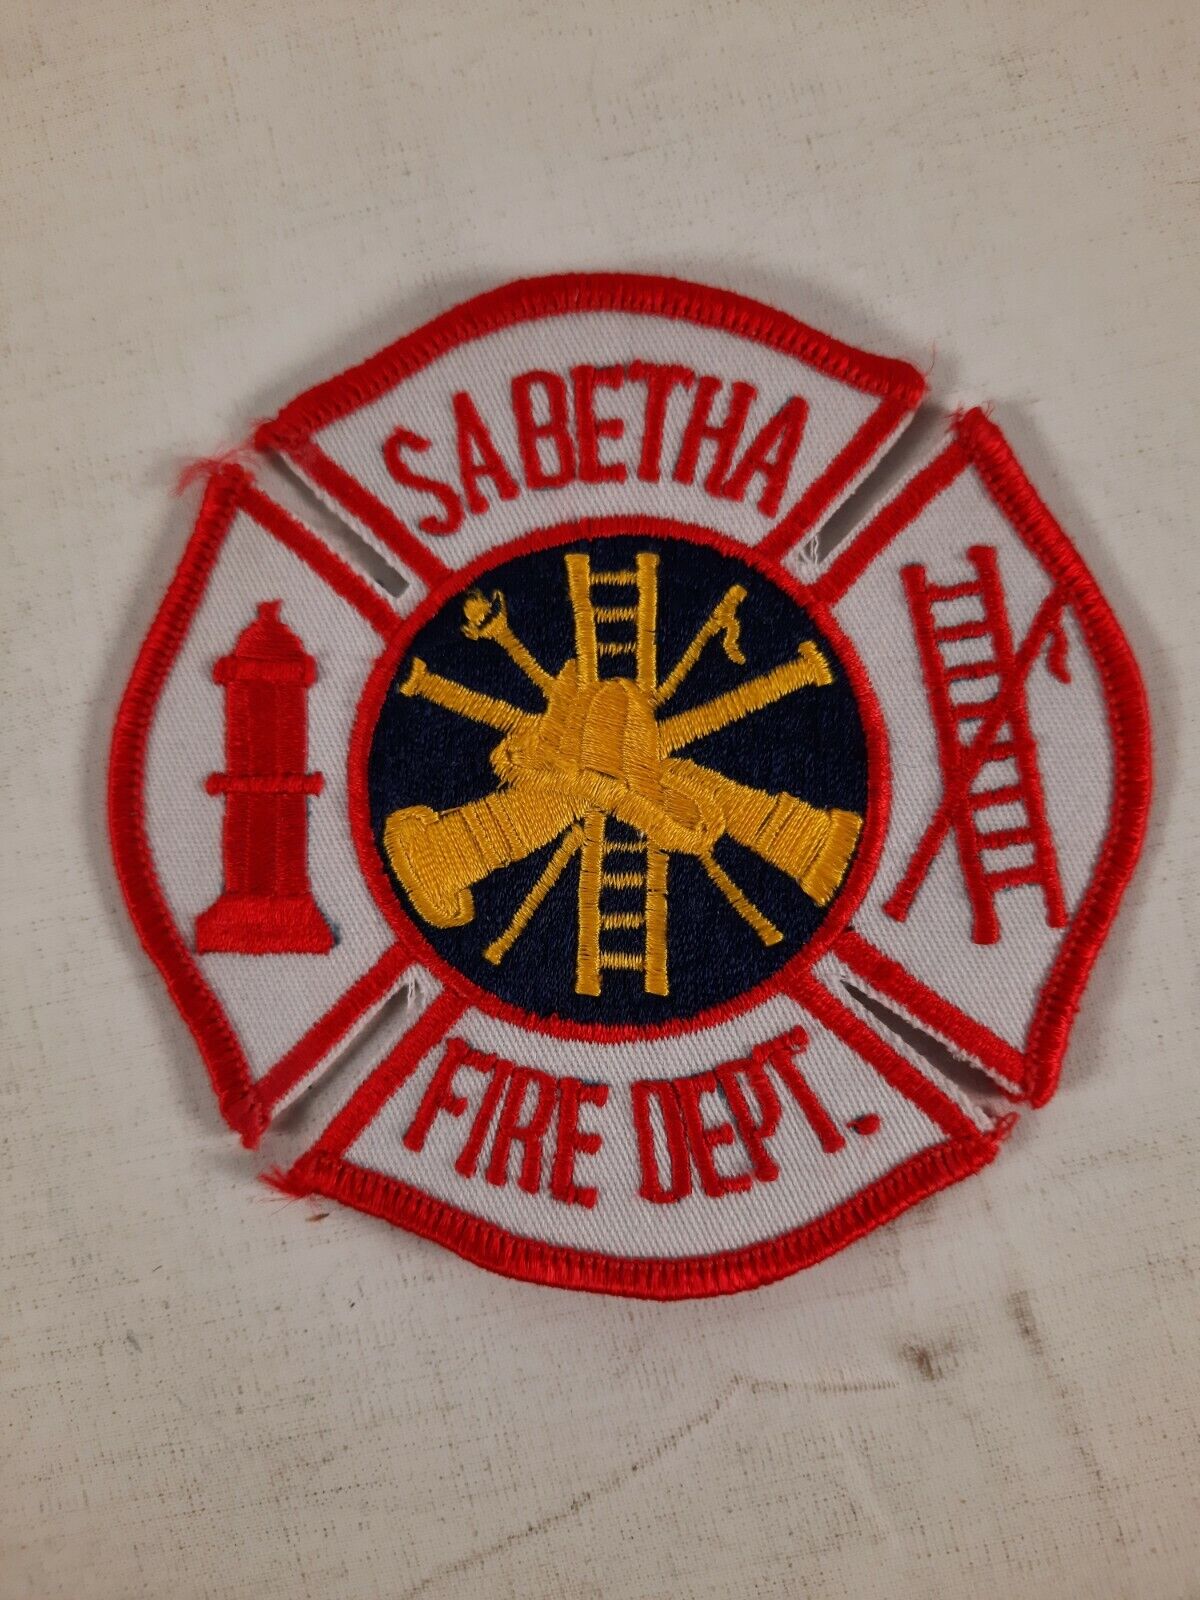 Sabetha  Fire dept patch fire department